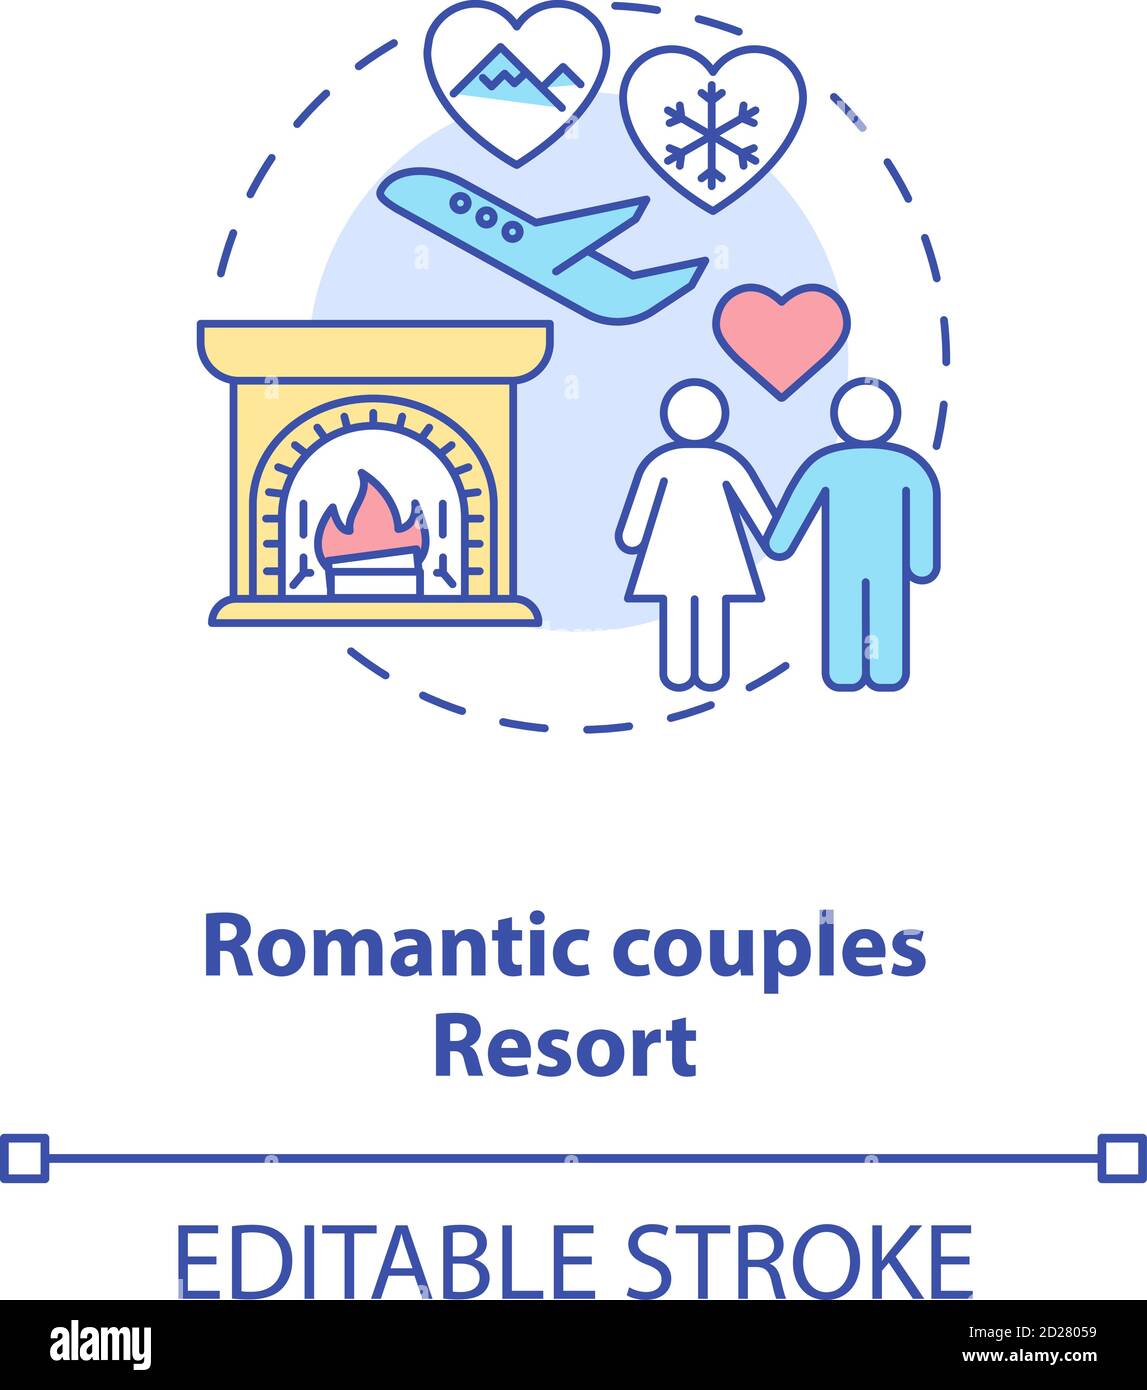 Romantic couples resort concept icon Stock Vector